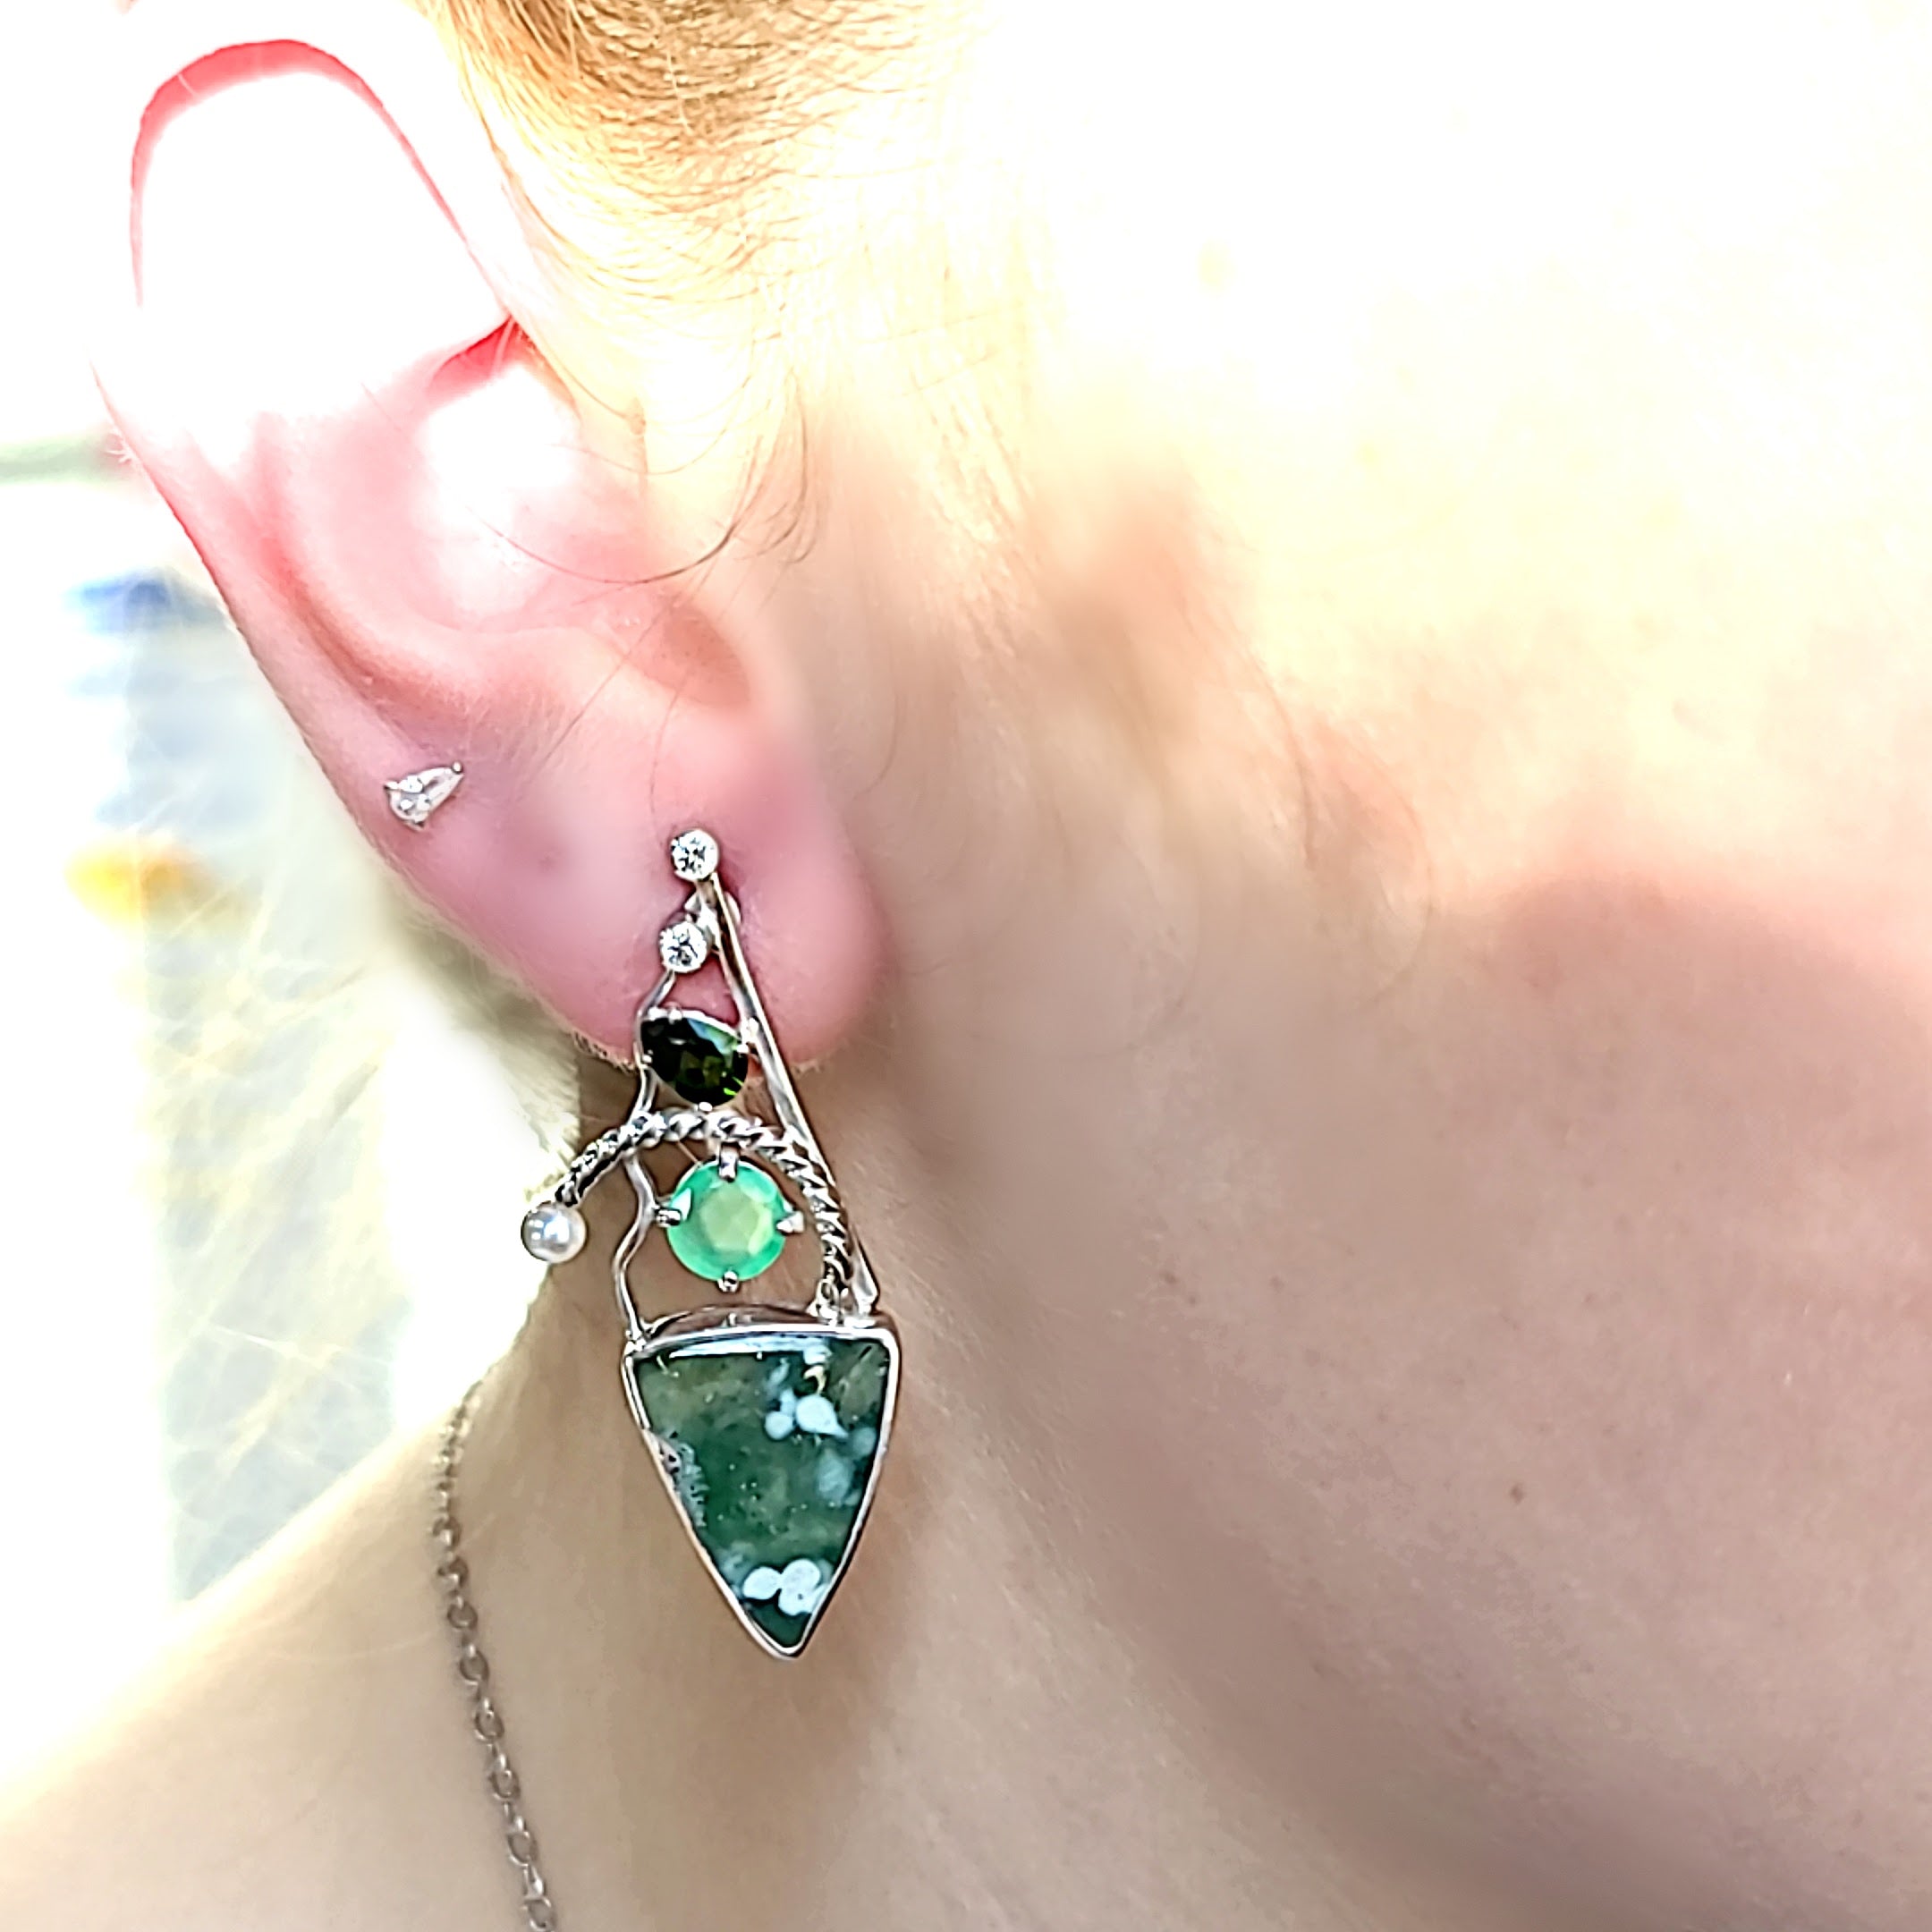 Model wearing Sterling Silver, Ocean Jasper, Chrome Diopside, Chrysoprase, Cubic Zirconia and Freshwater Pearl earrings